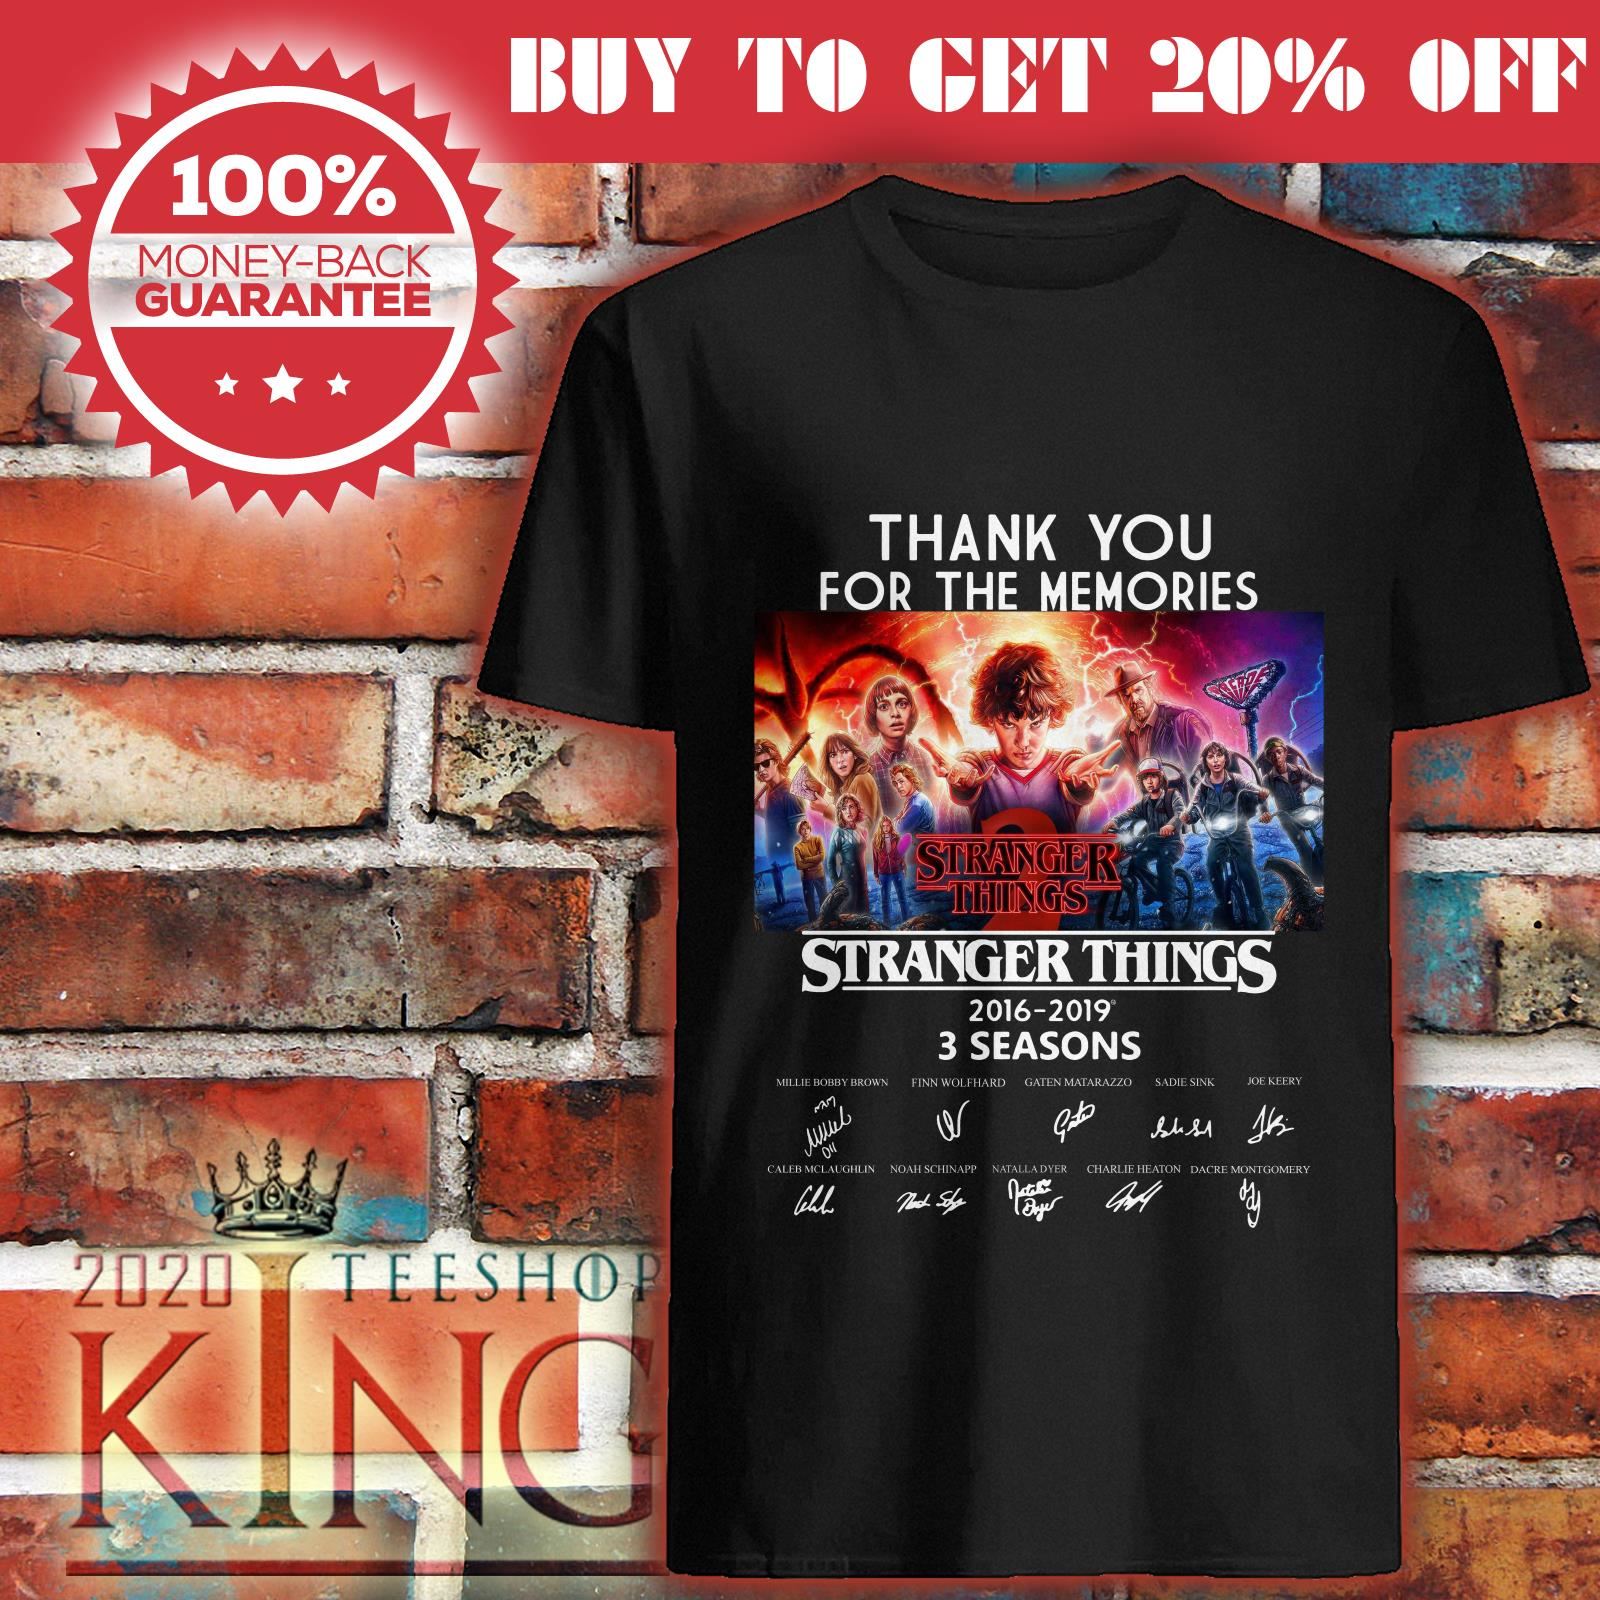 stranger-things-3-seasons-2016-2019-thank-shirt.jpg